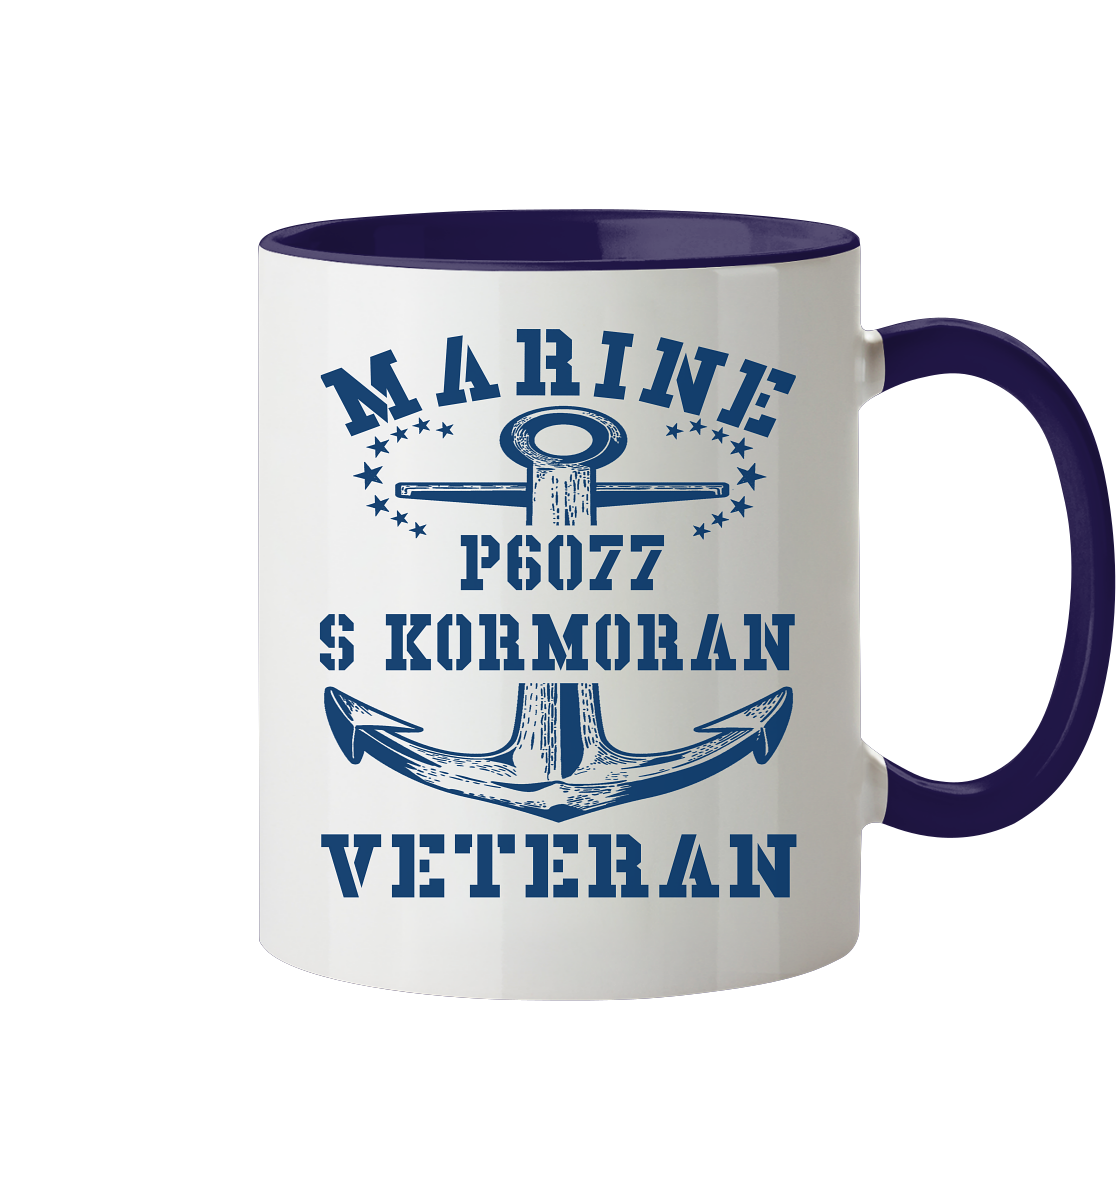 P6077 S KORMORAN Marine Veteran - Tasse zweifarbig